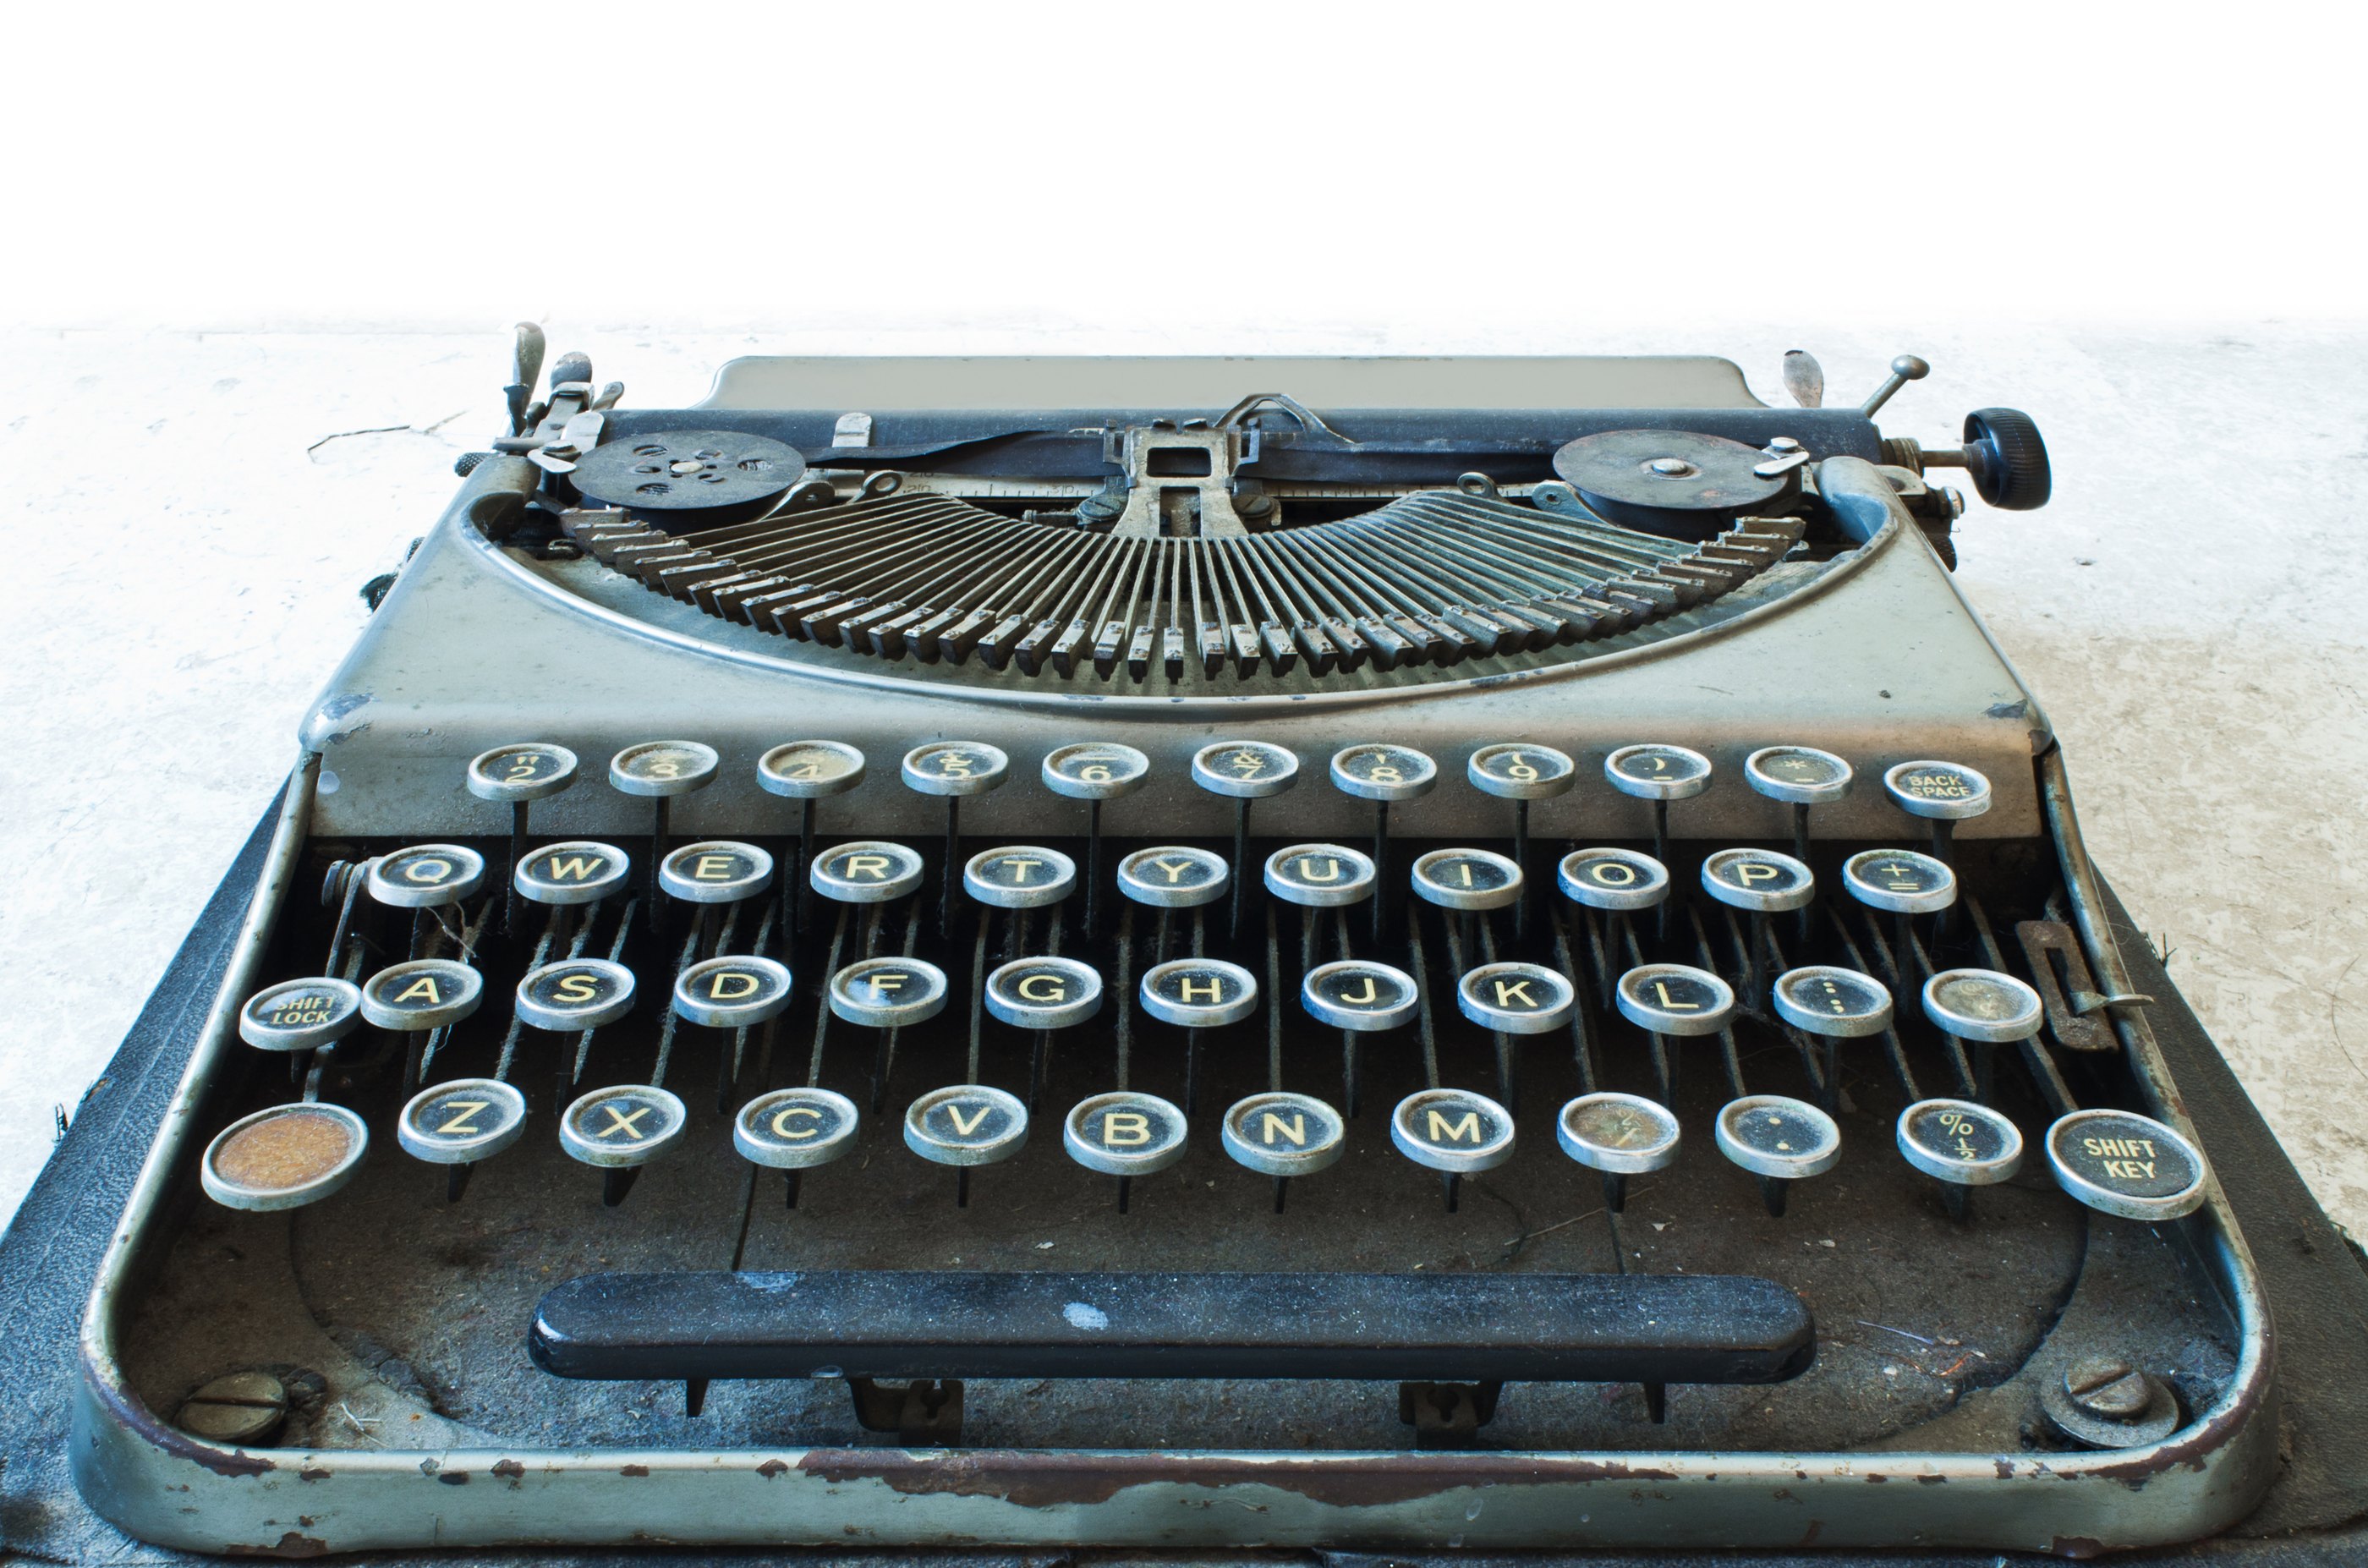 Old Antique typewriter keyboard isolated on white